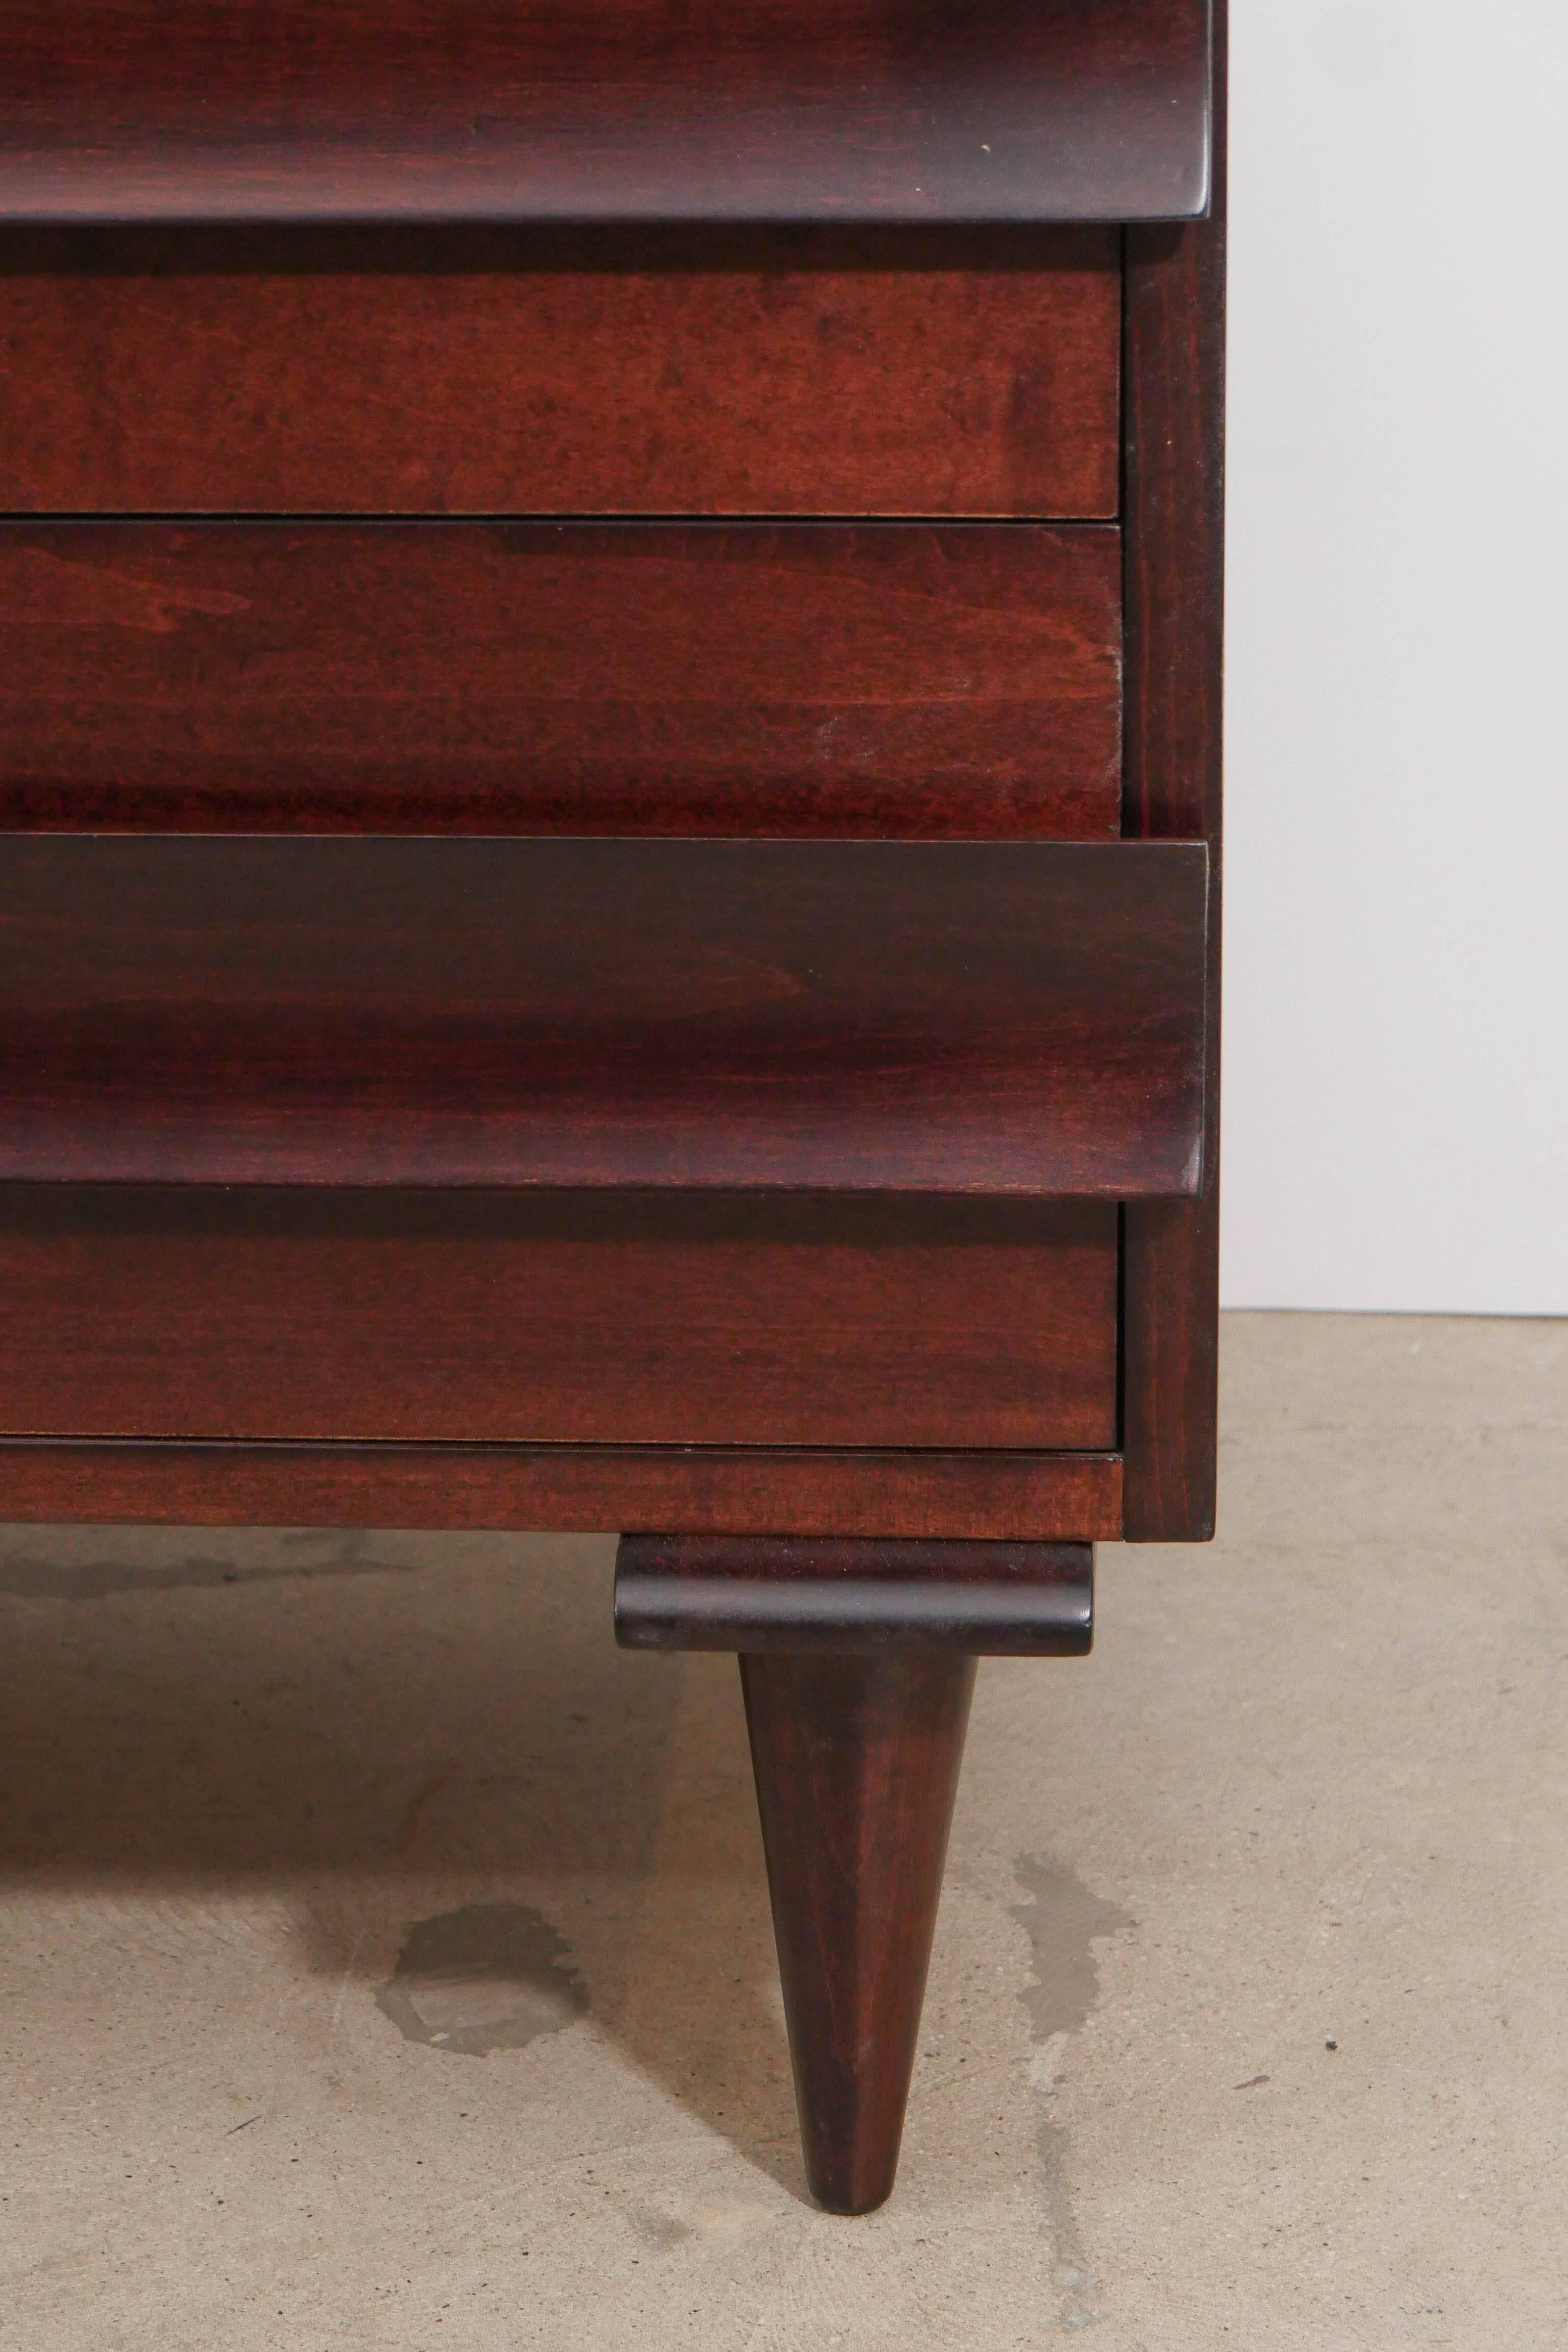 American Modernist Dresser by Carlo di Carli for Singer & Sons